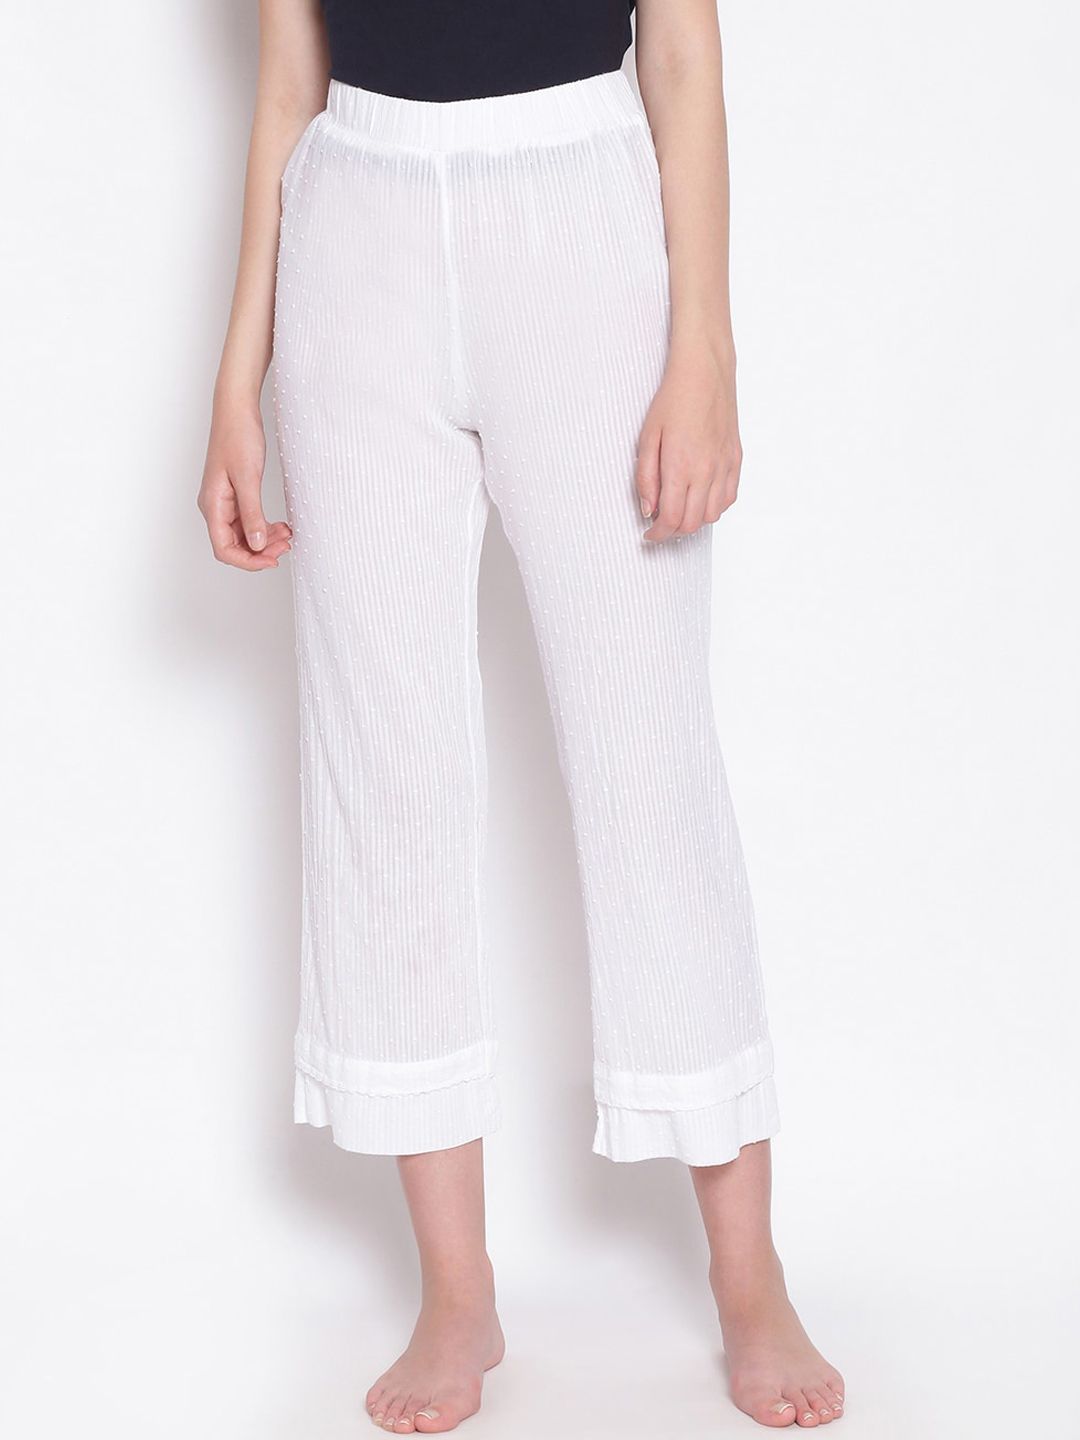 Oxolloxo Women's Cotton Solid White Pyjama Price in India